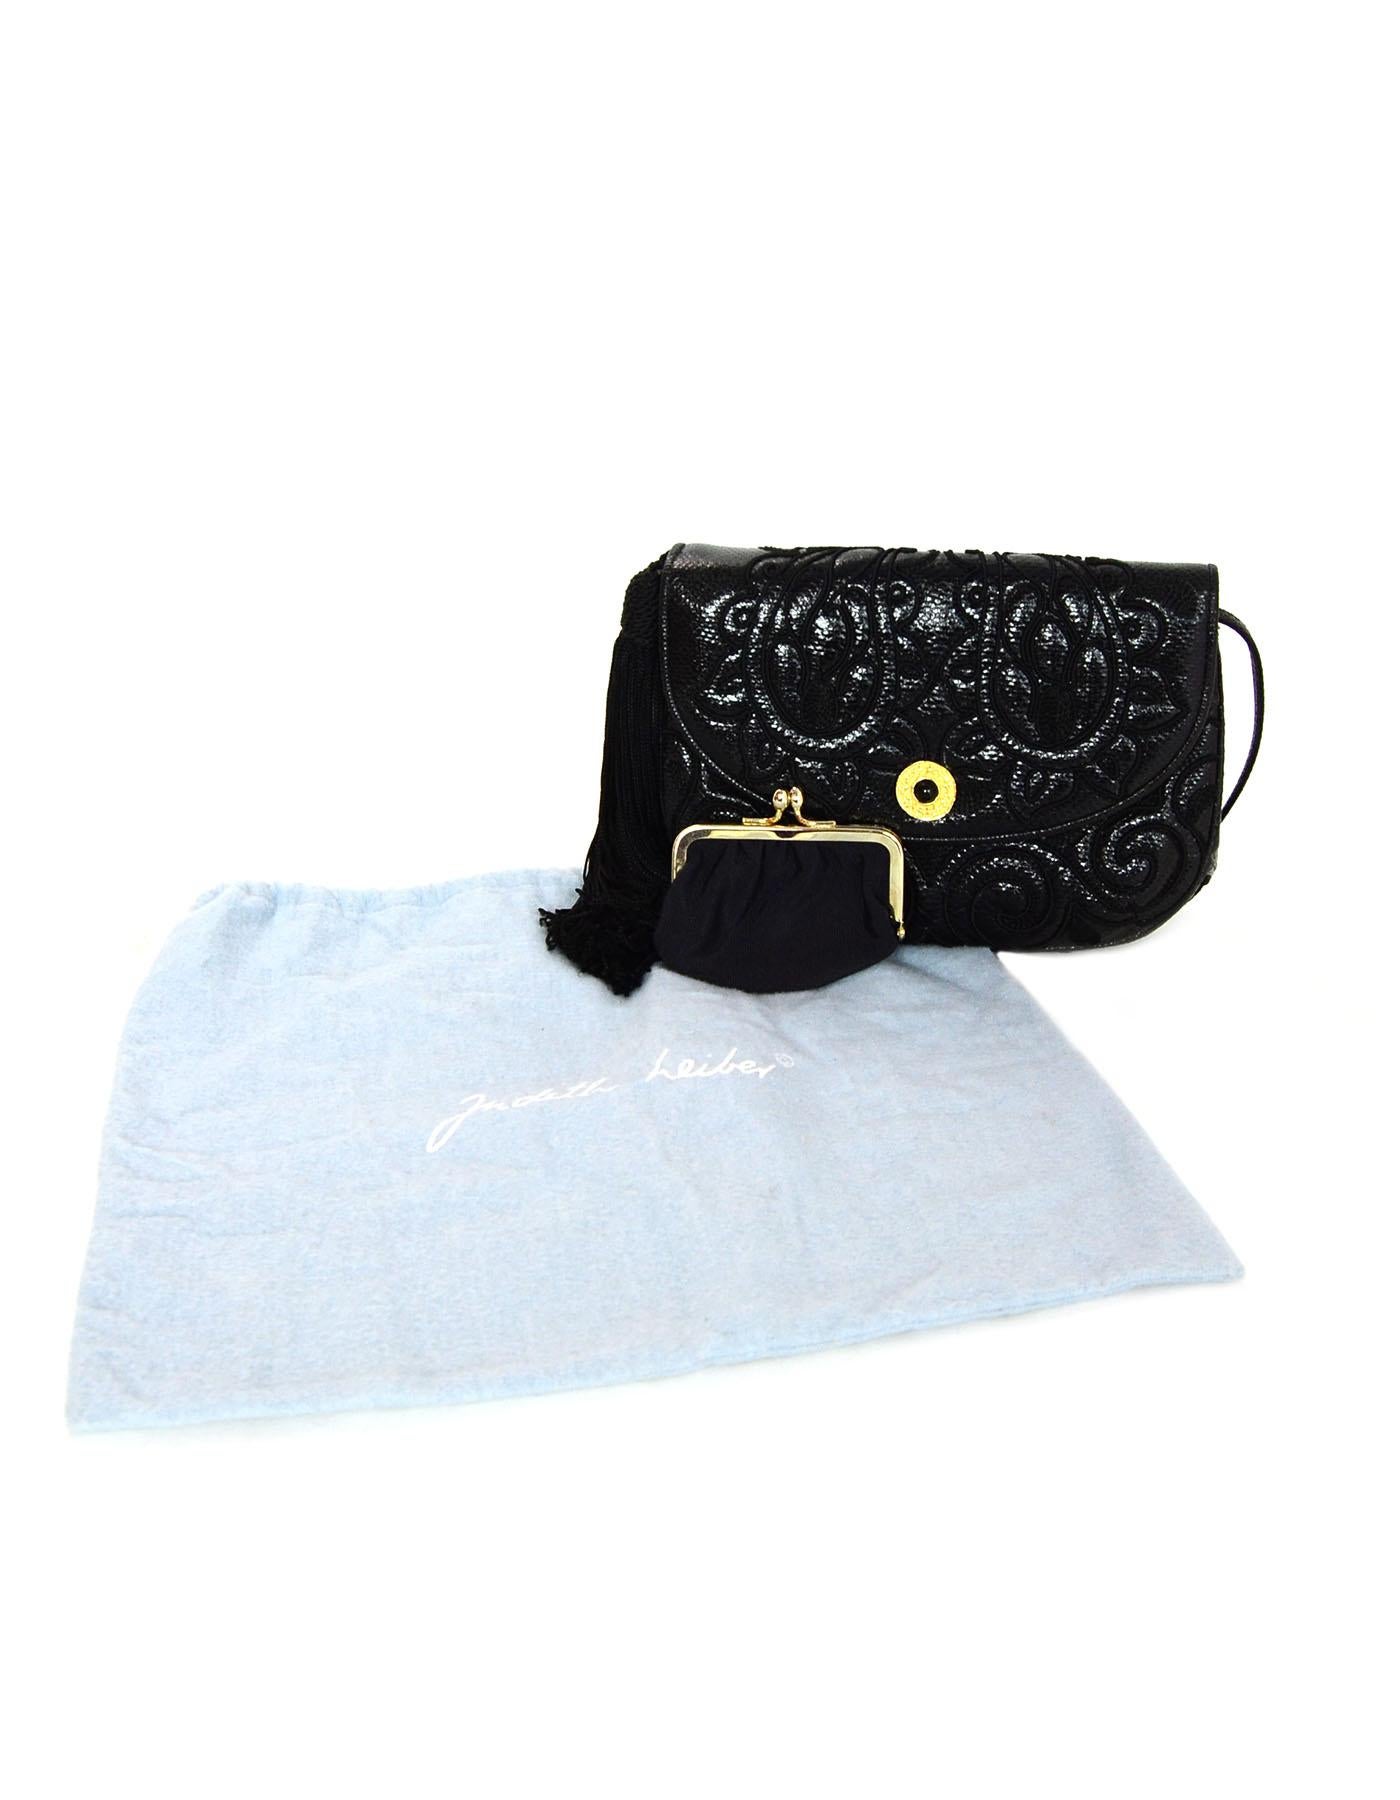  Judith Leiber Vintage Embroidered Black Lizard Clutch/ Crossbody Bag 3